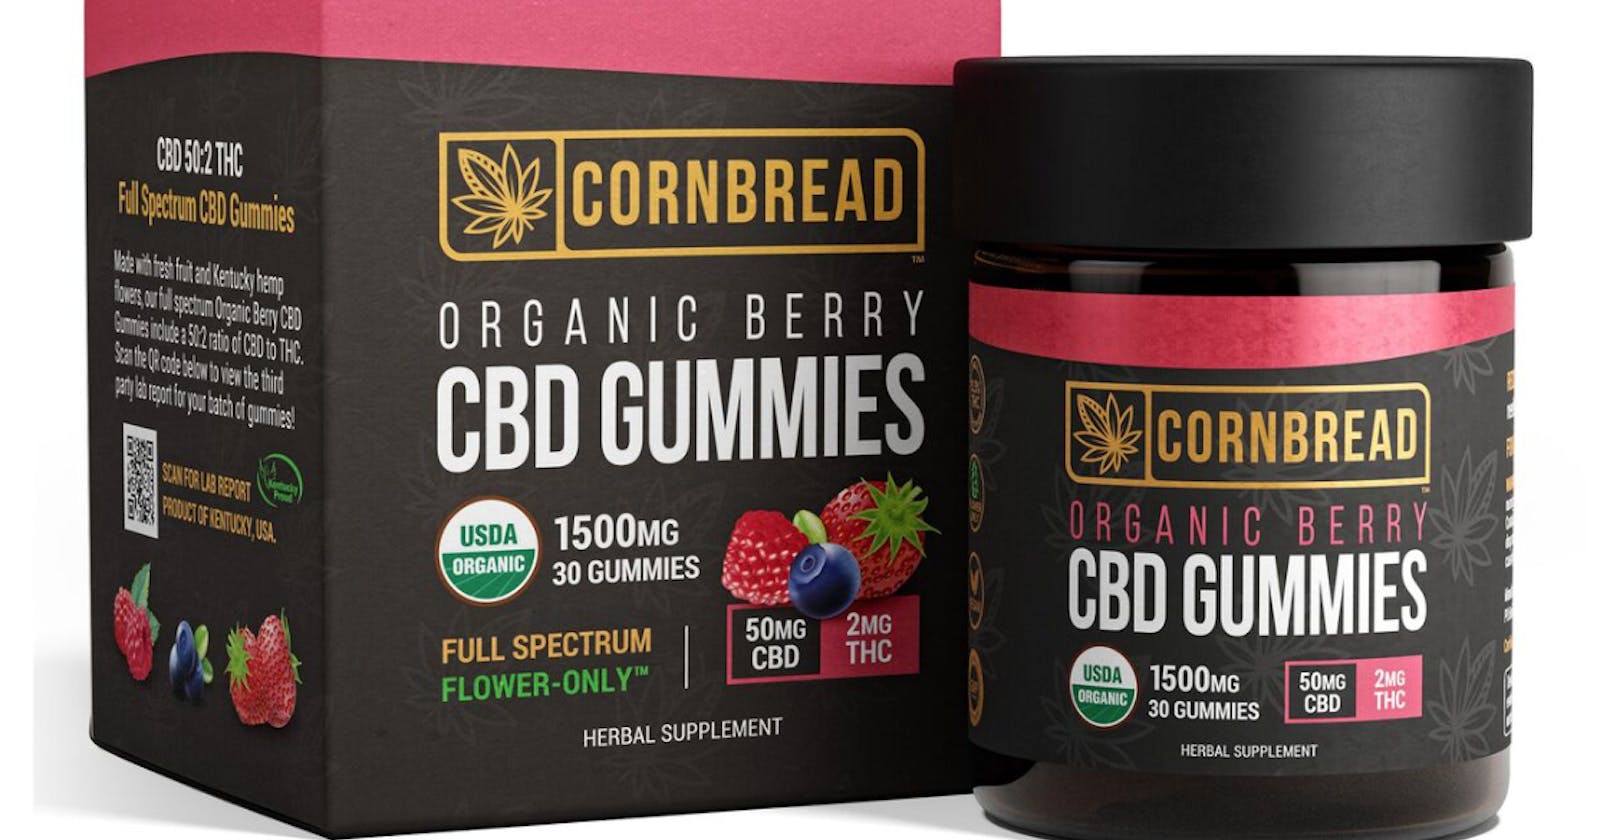 Cornbread Hemp Organic CBD Gummies Reviews?